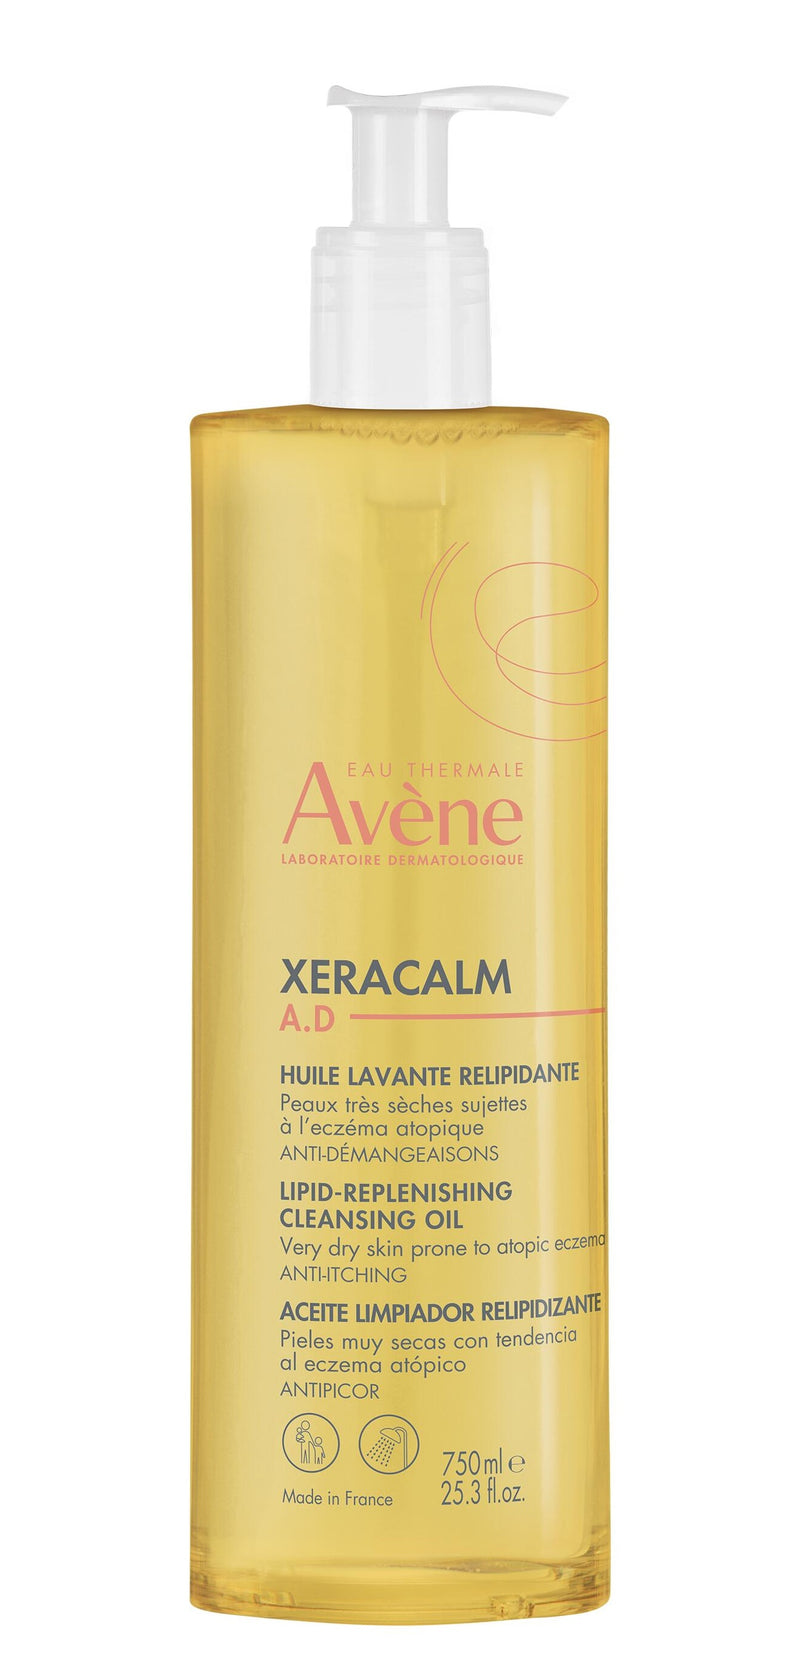 Avène Xeracalm A.D. Lipid-Replenishing Cleansing Oil 750ml